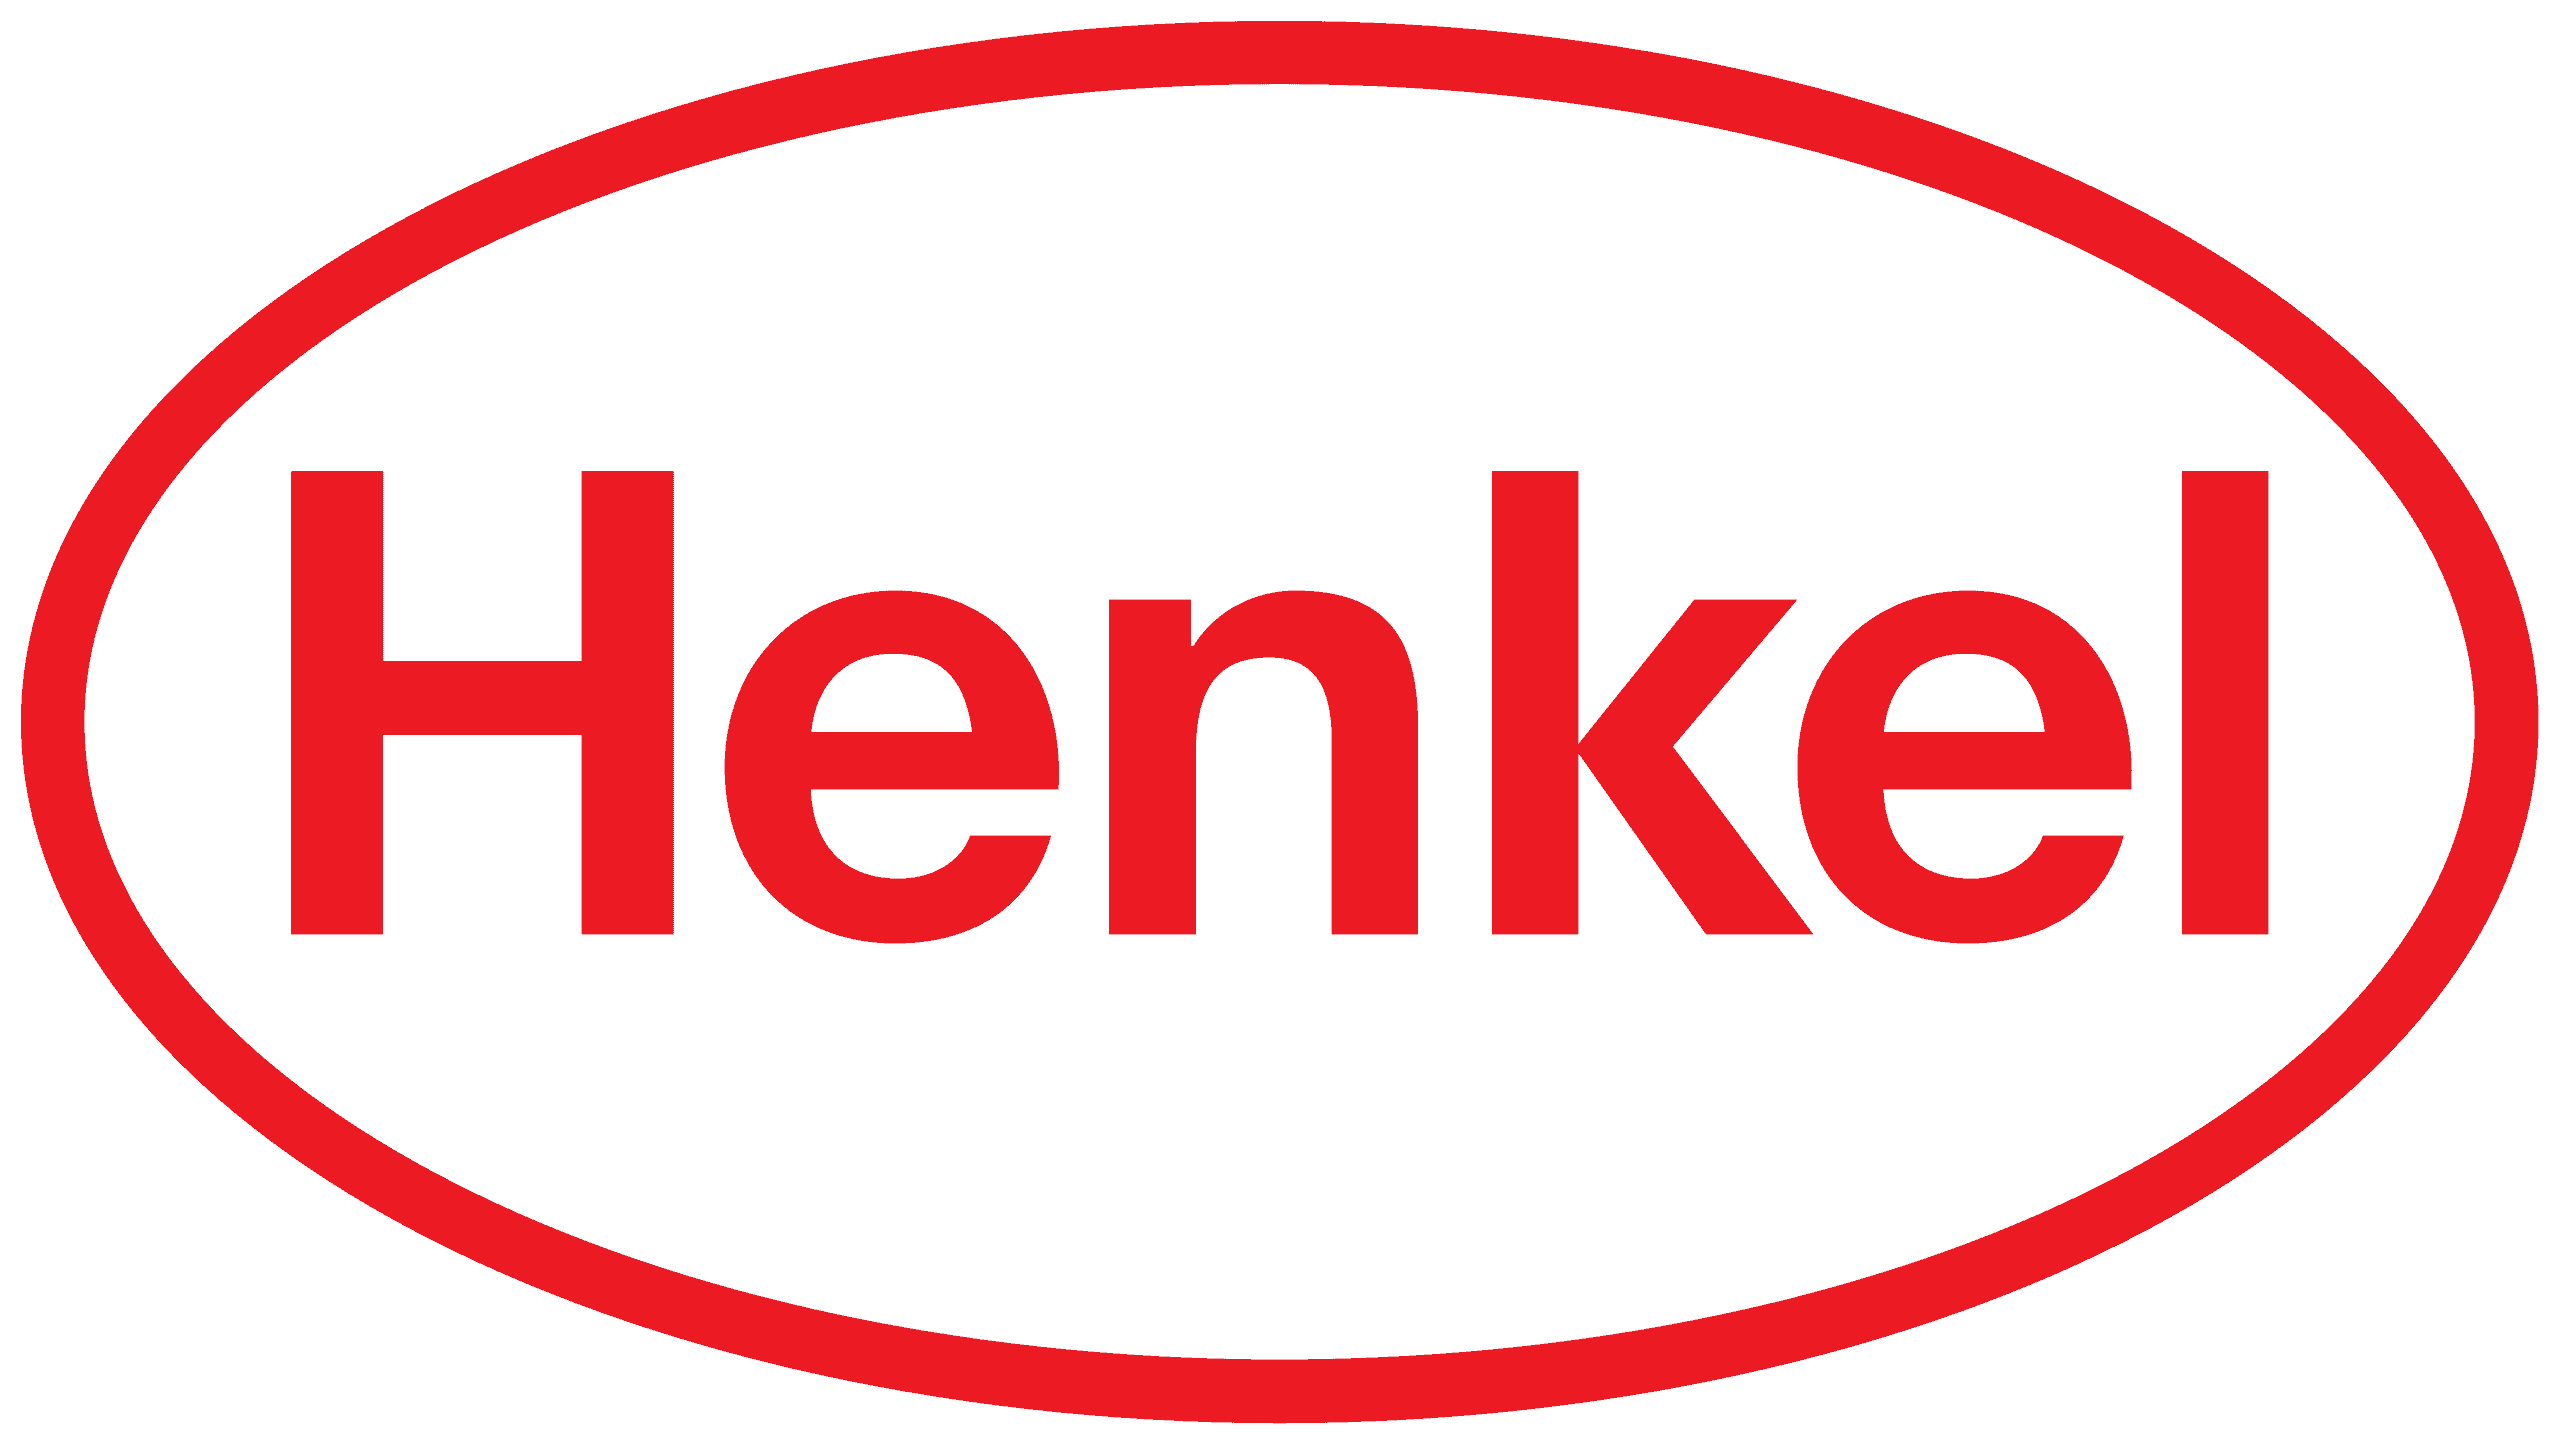 2560px-Henkel-Logo.svg